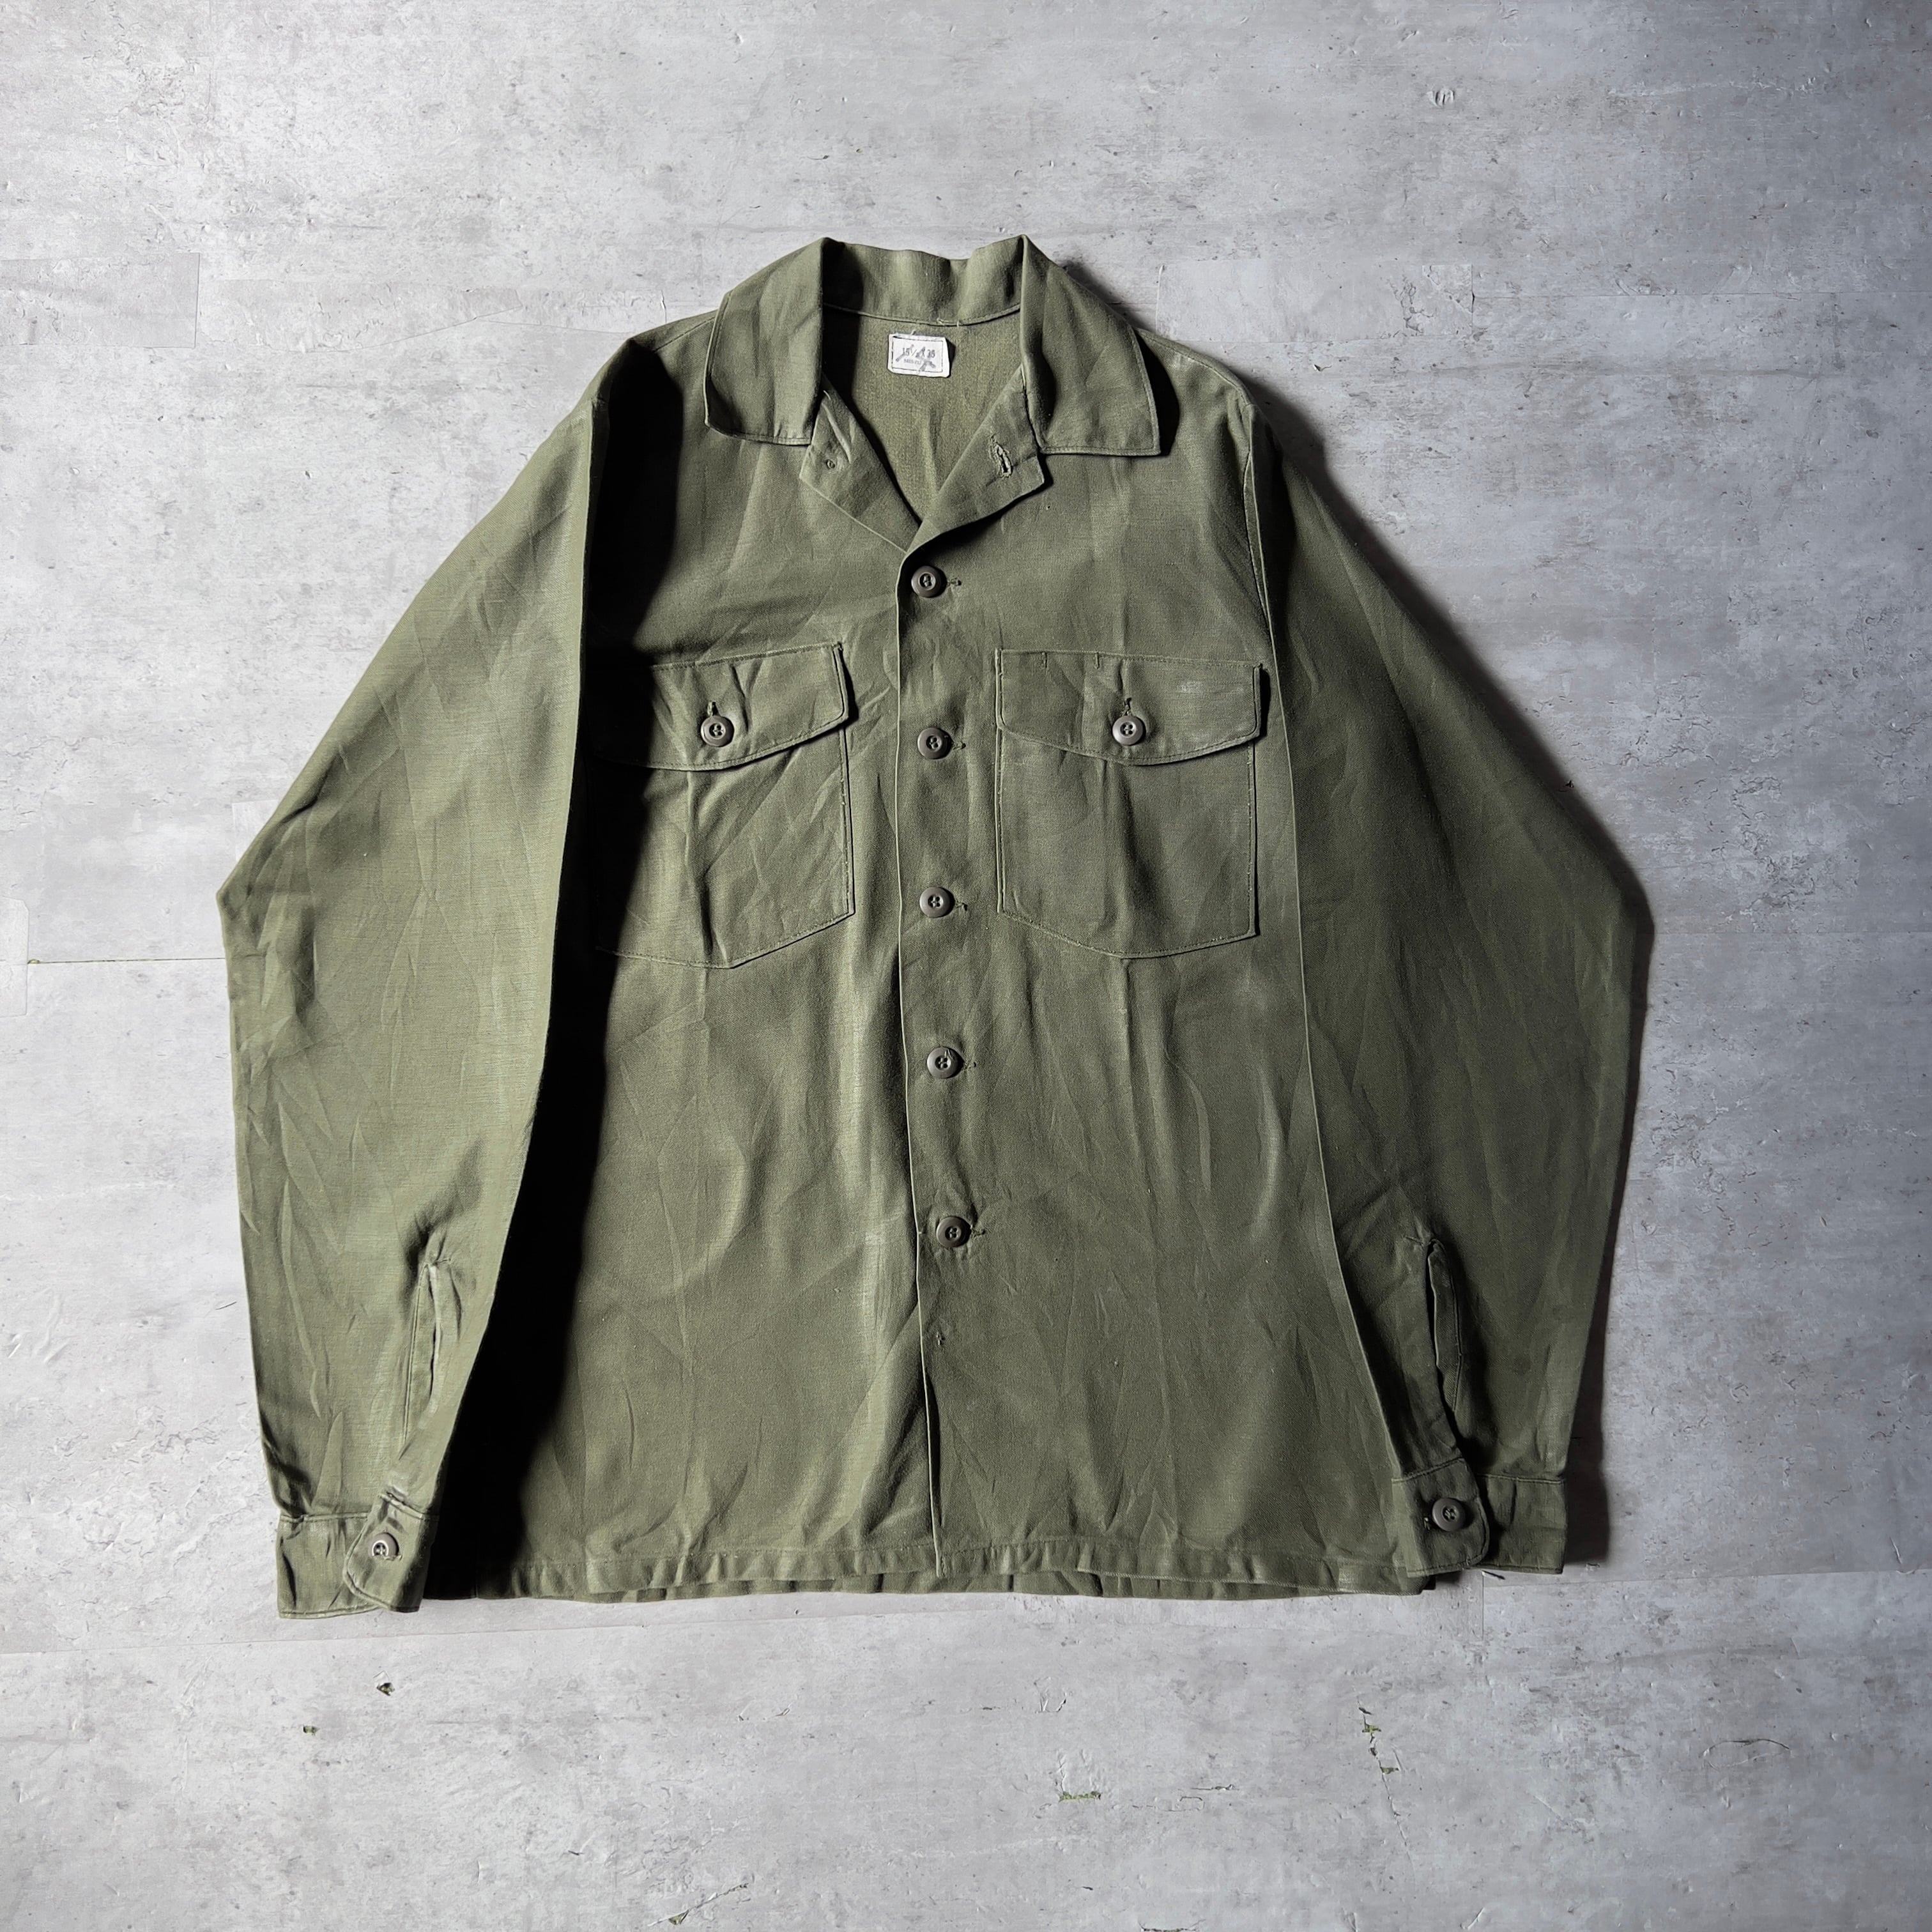 70s “US ARMY” OG 107 Sateen Shirts 70年代 米国軍 73年会計 コットンサテン ユーティリティシャツ ミリタリー  military